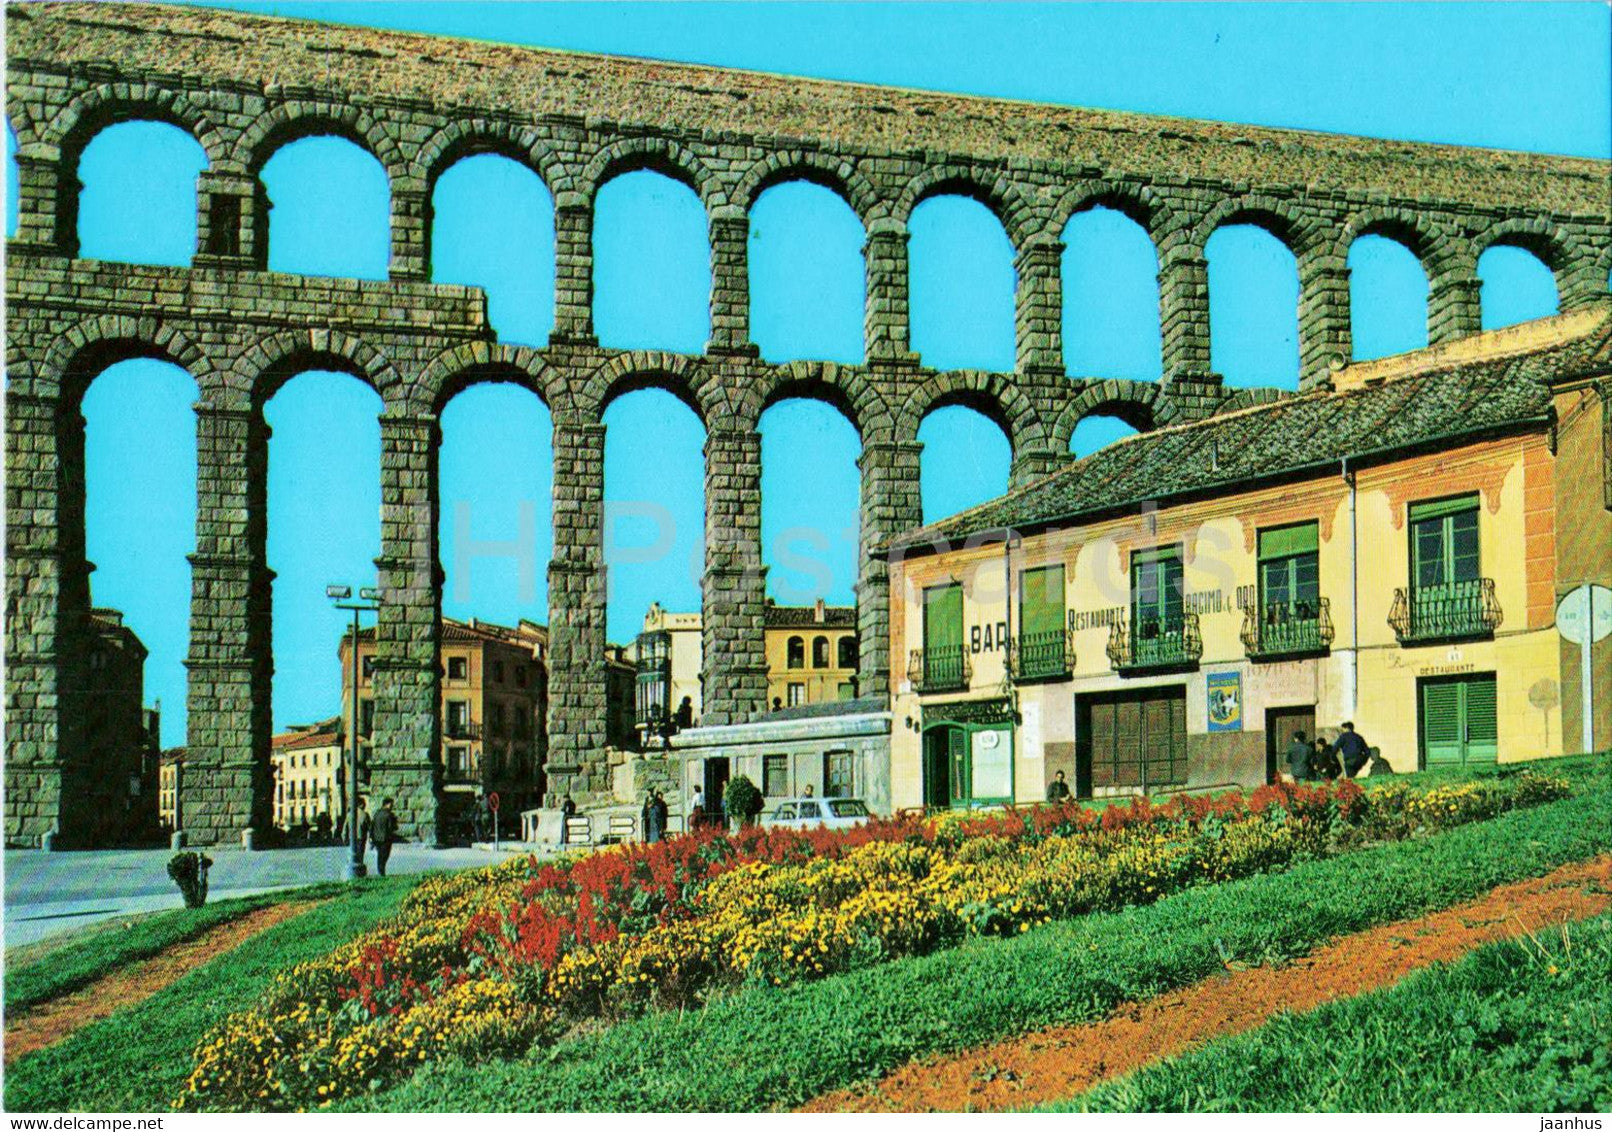 Segovia - Acueducto romano - Roman aqueduct - ancient world - 802 - Spain - unused - JH Postcards